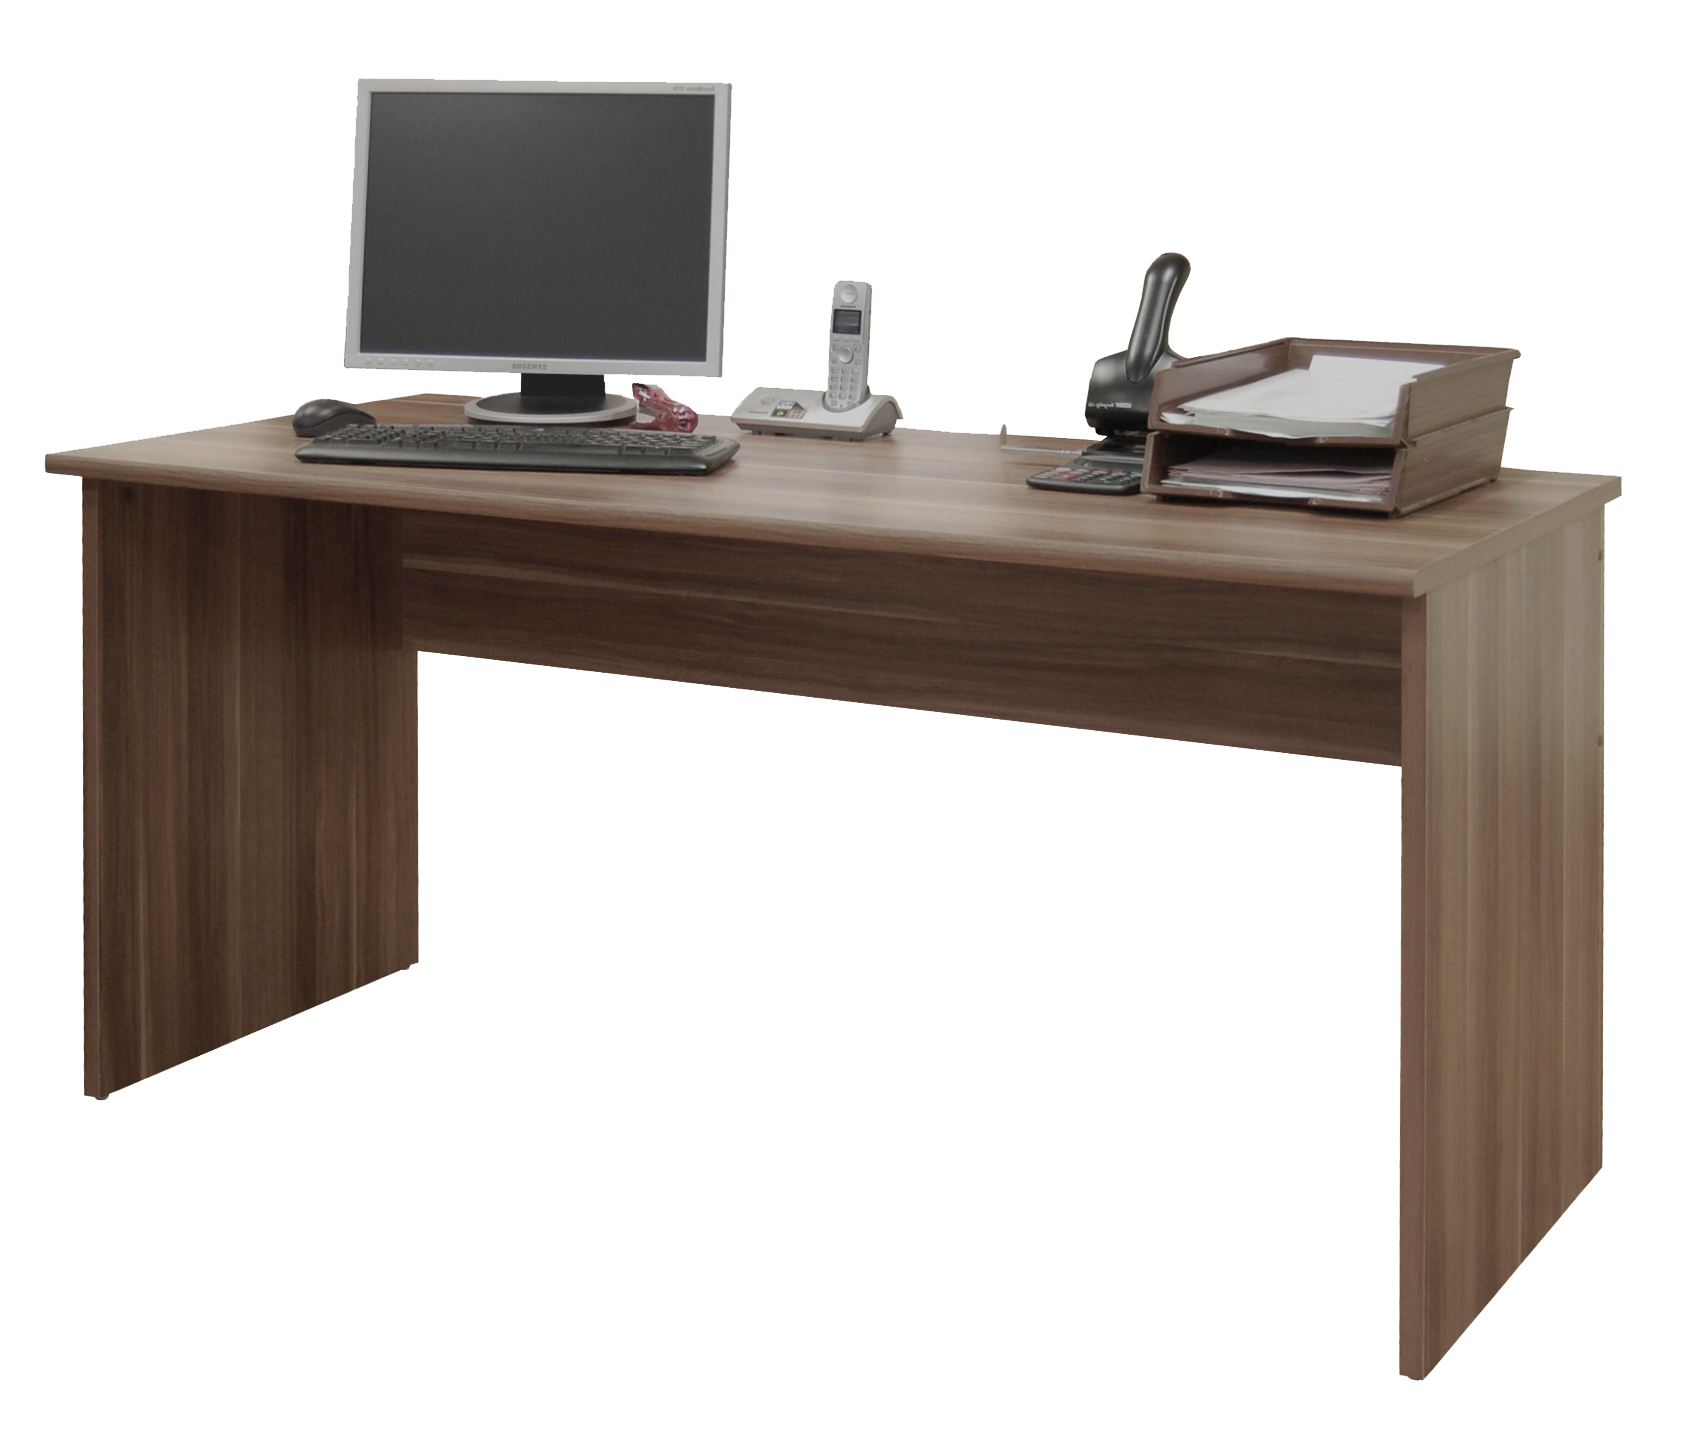 Kancelářský stůl JH 01  <span class="discount"><span style="color: red;"> SLEVA 23%</span></span>